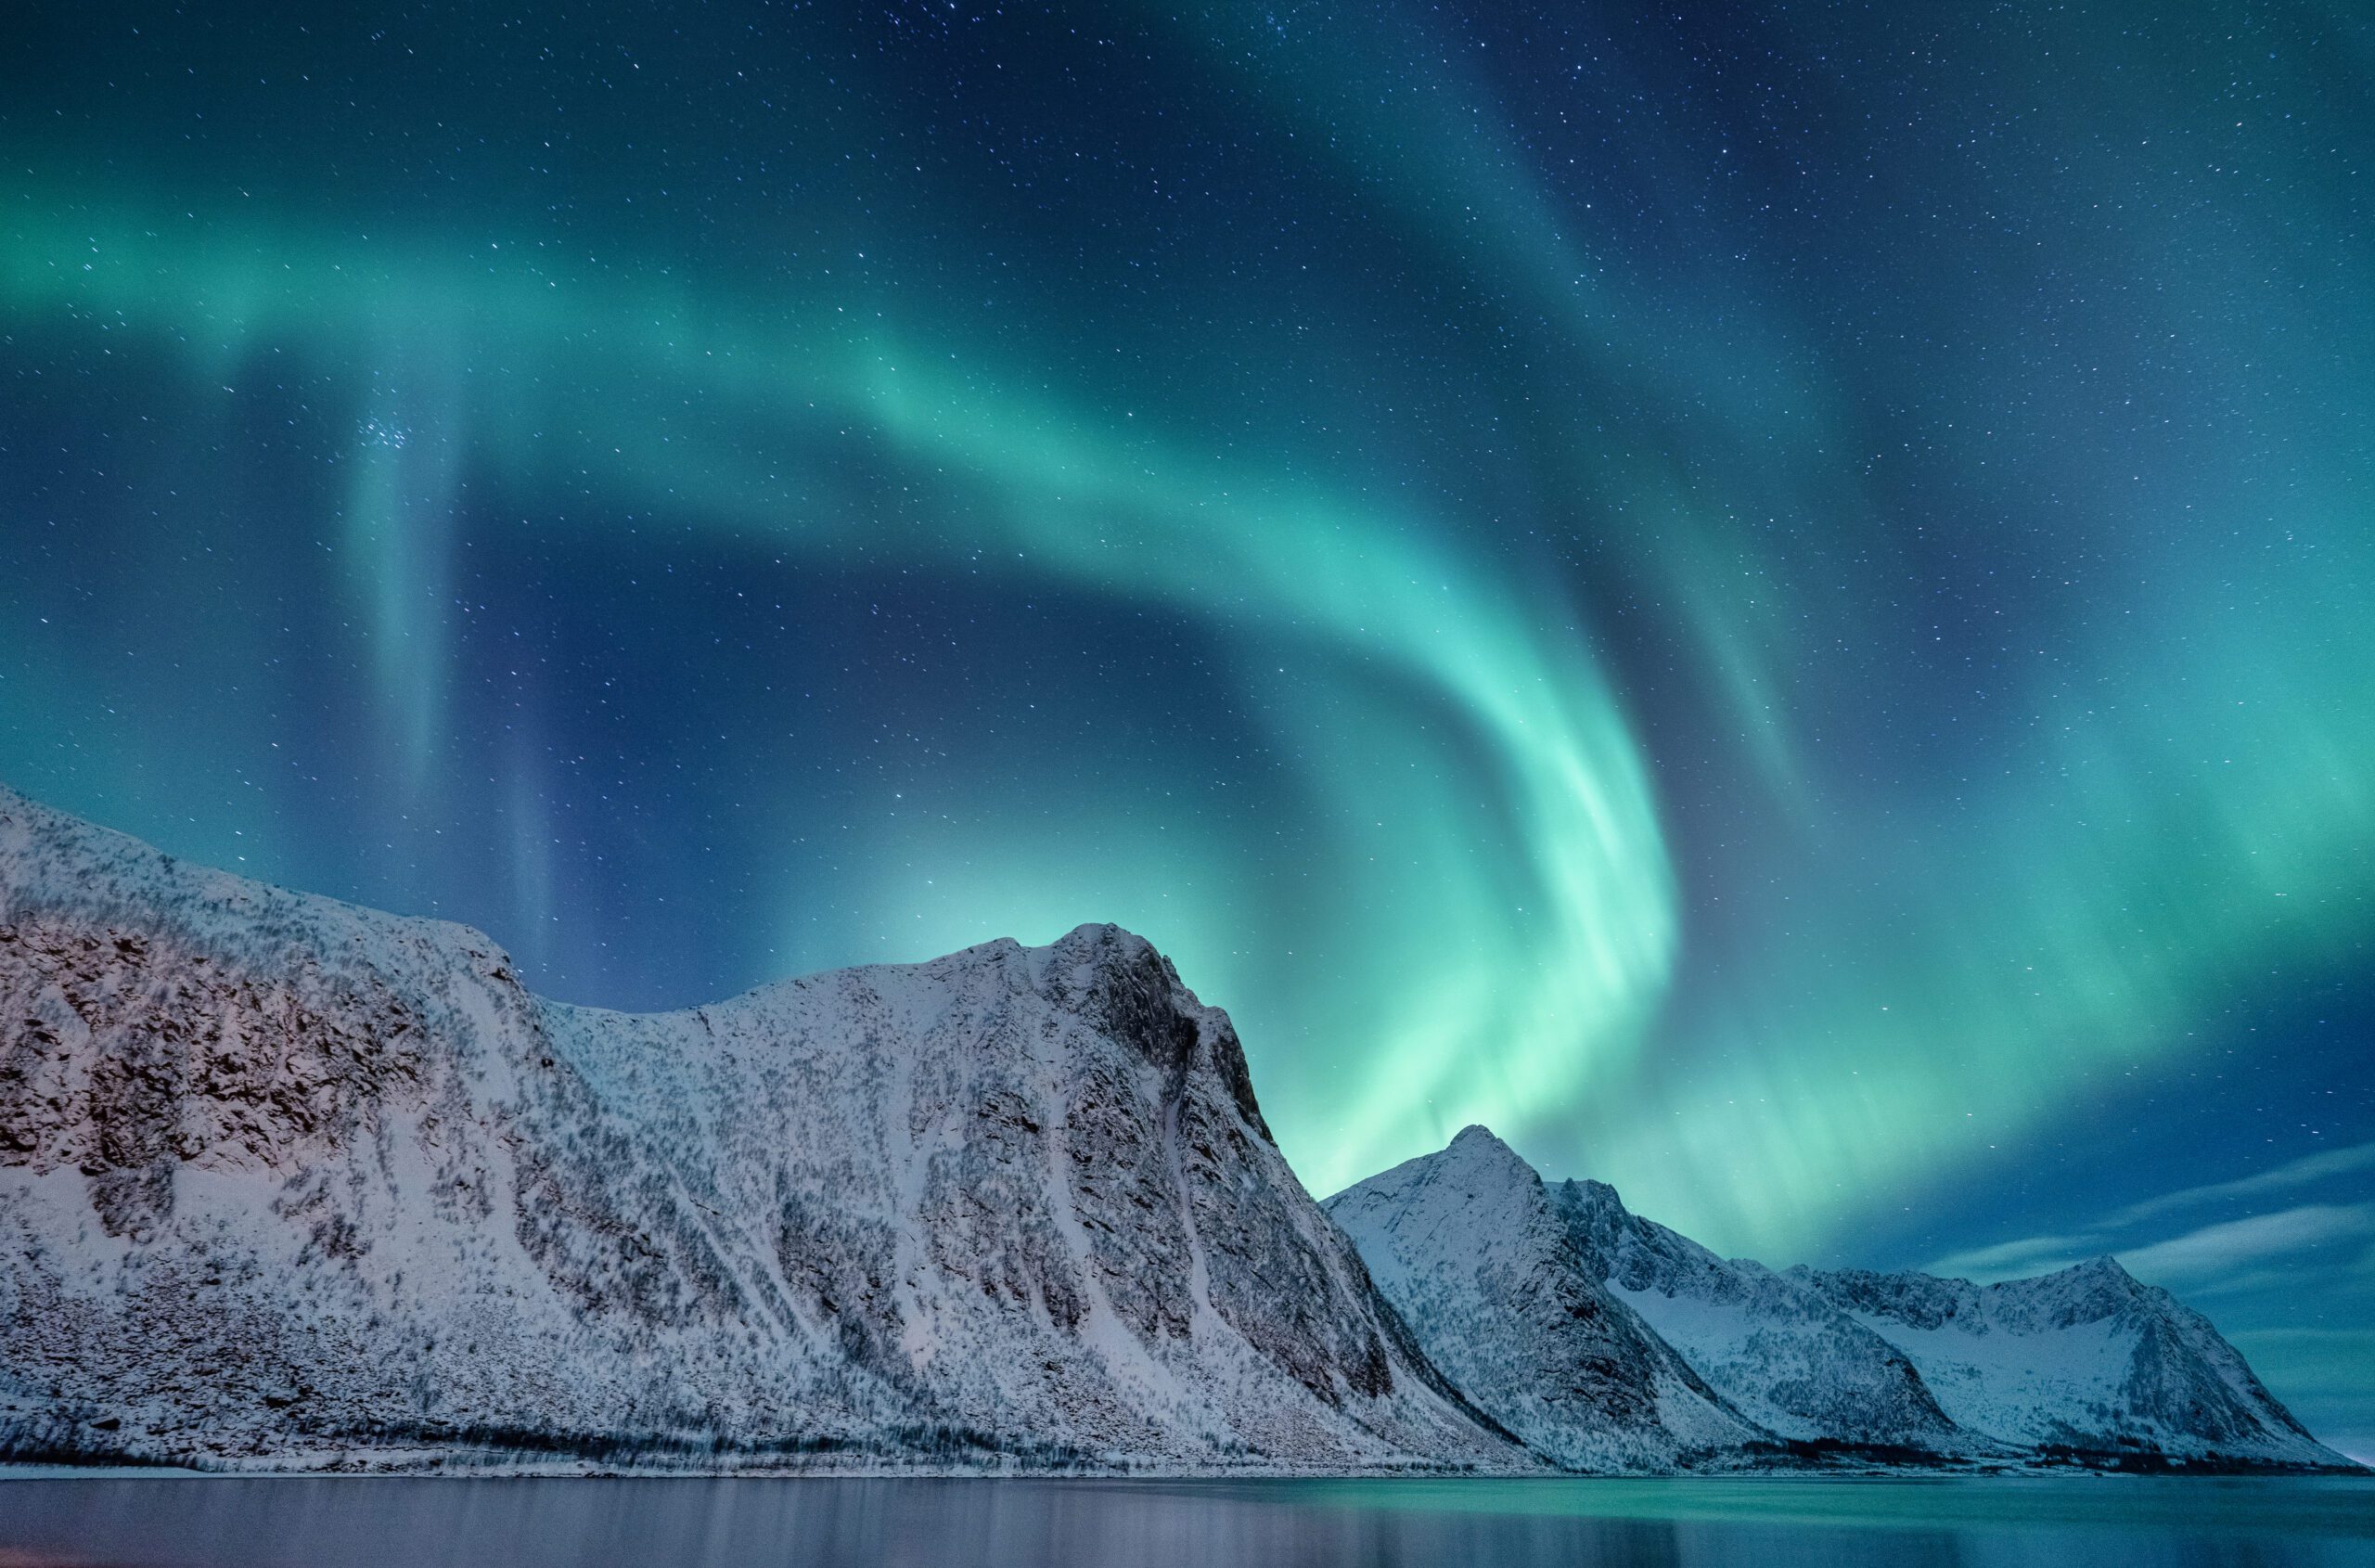 aurora-borealis-in-norway-green-northern-lights-a-2022-01-26-23-48-29-utc